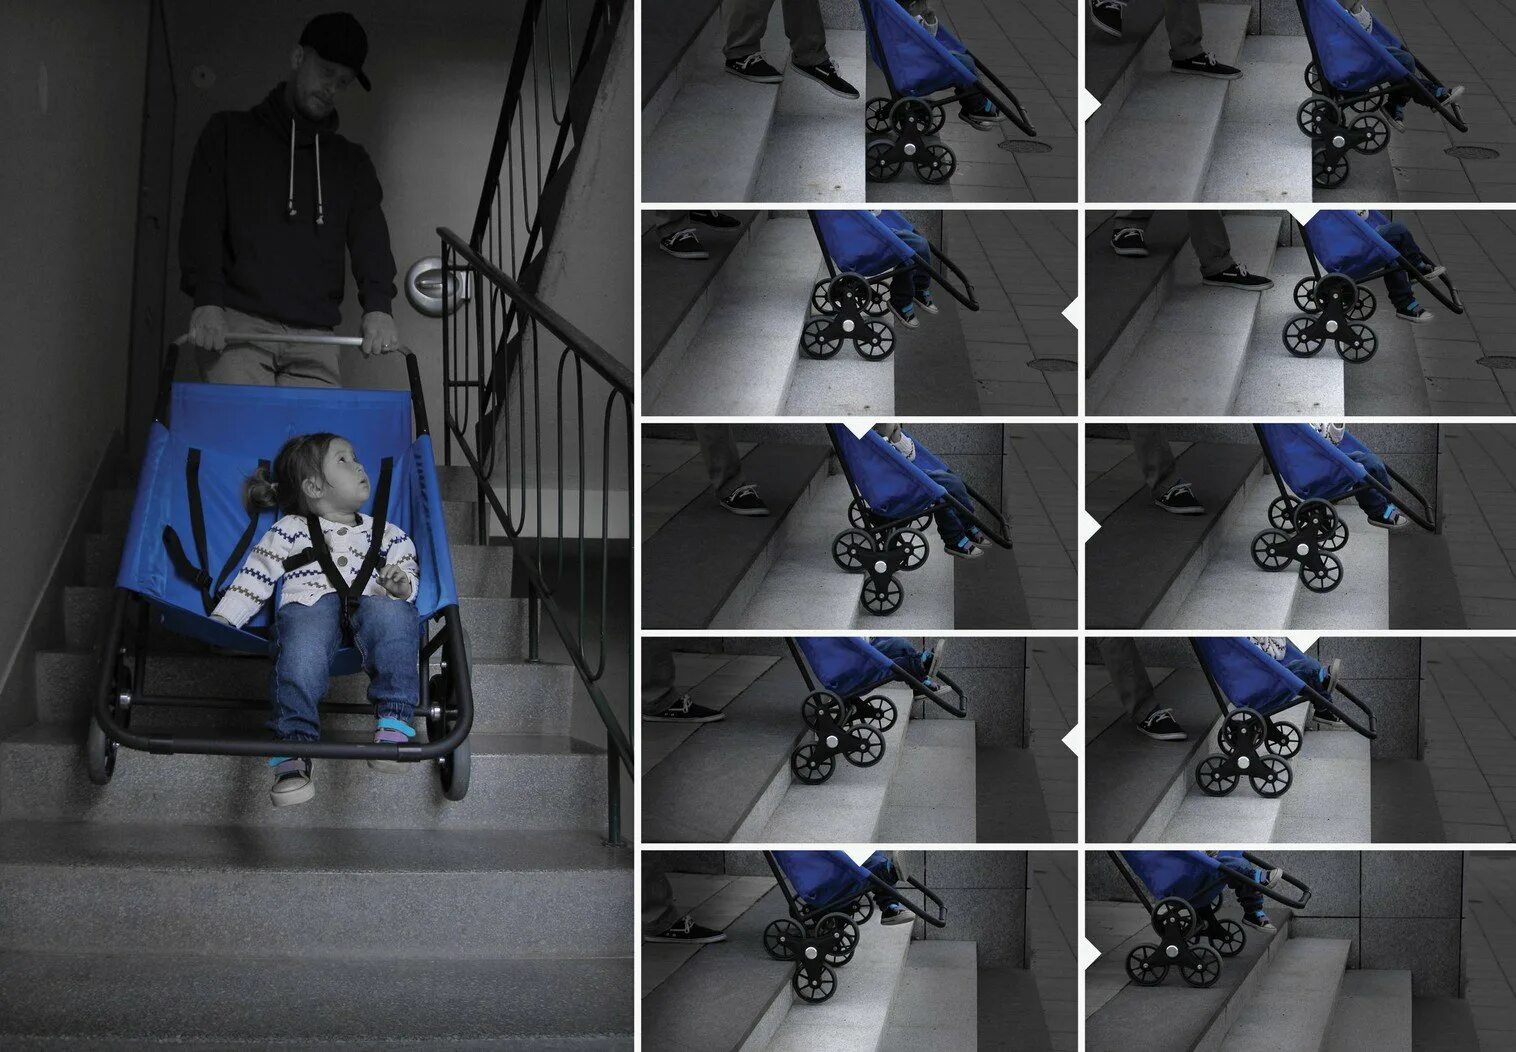 Лестница для колясок. С коляской по лестнице. Спуск для колясок на лестнице. Детская коляска для лестницы. Как спускать коляску по лестнице с ребенком